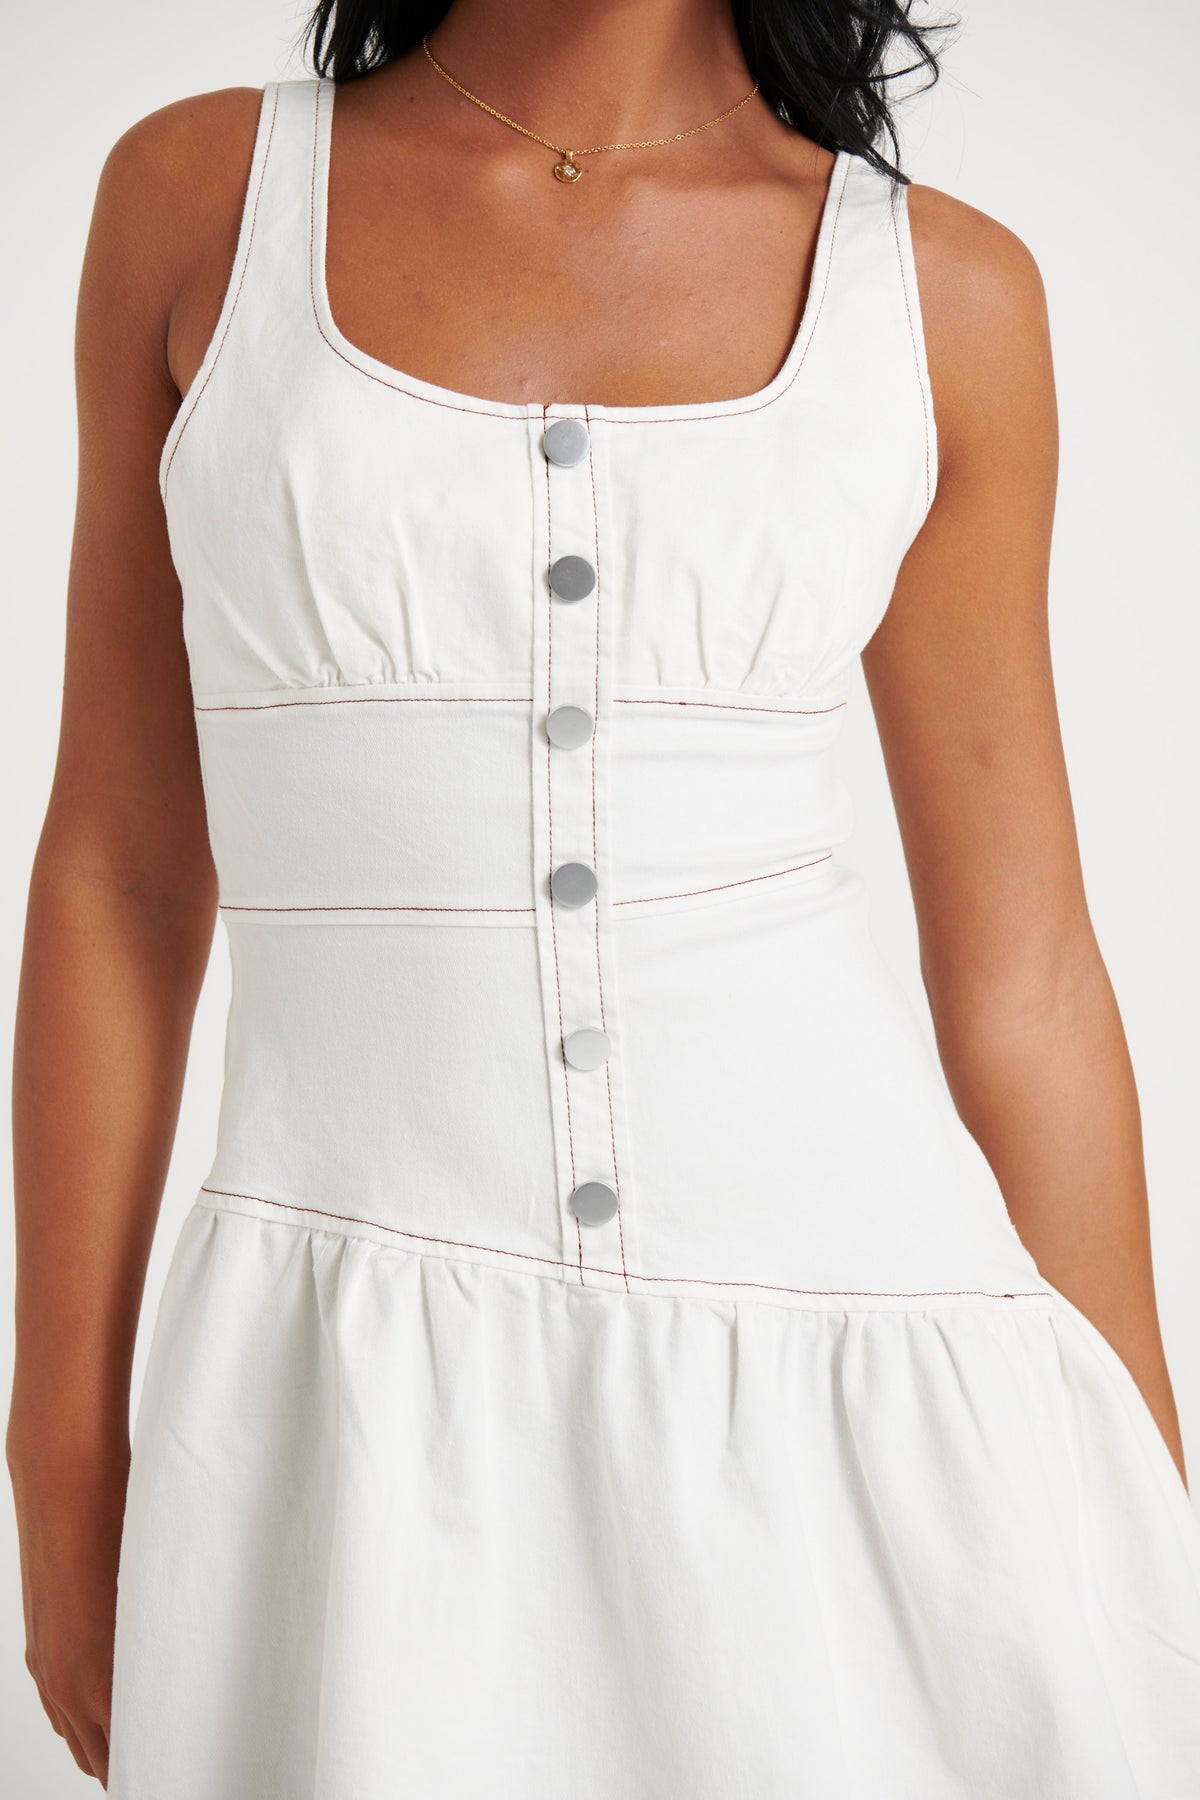 Thanee Mini Dress White - FINAL SALE